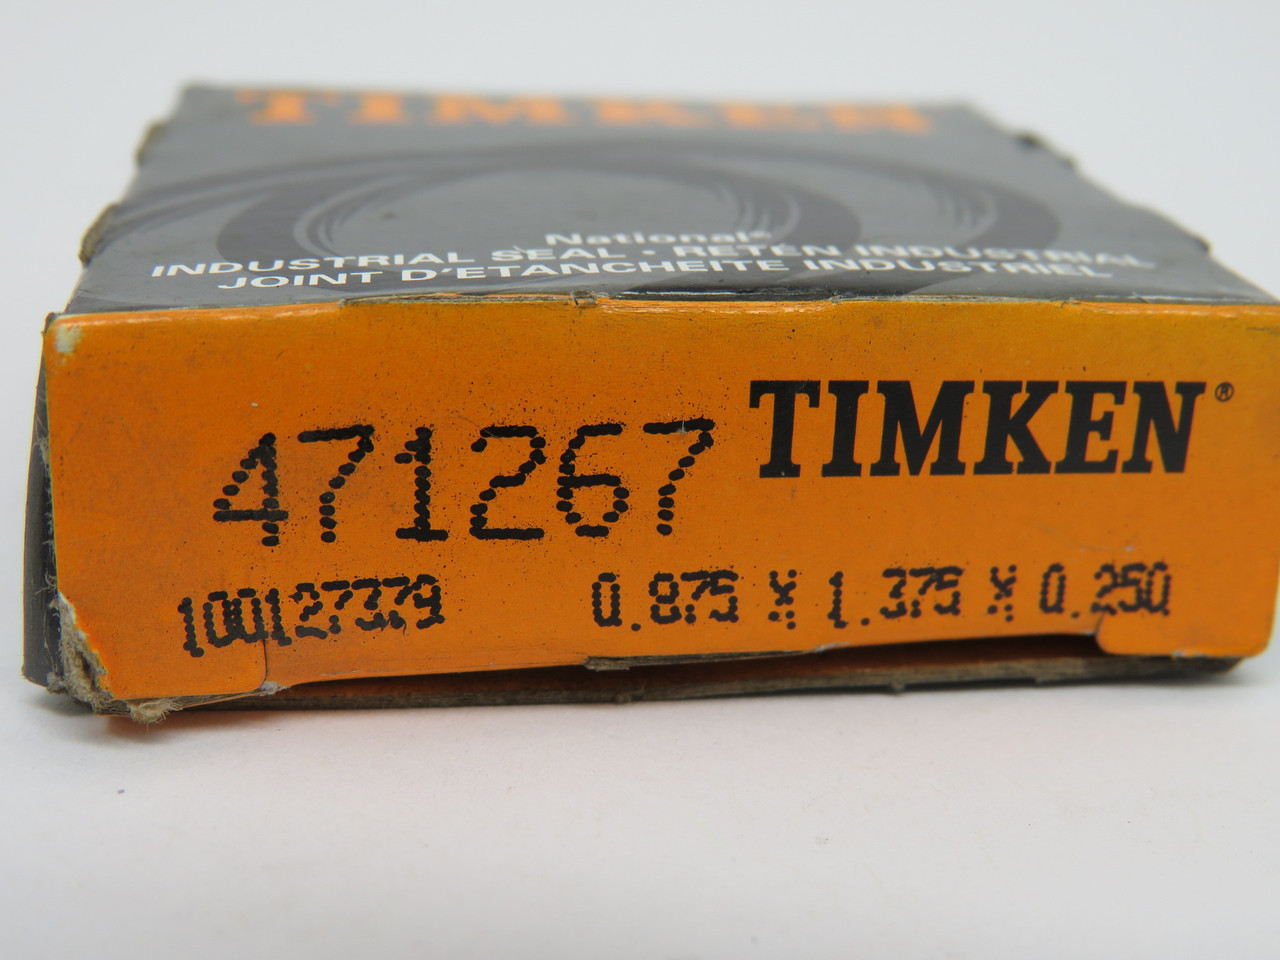 Timken/National 471267 Oil Seal 0.875" ID 1.375" OD 0.250" W ! NEW !